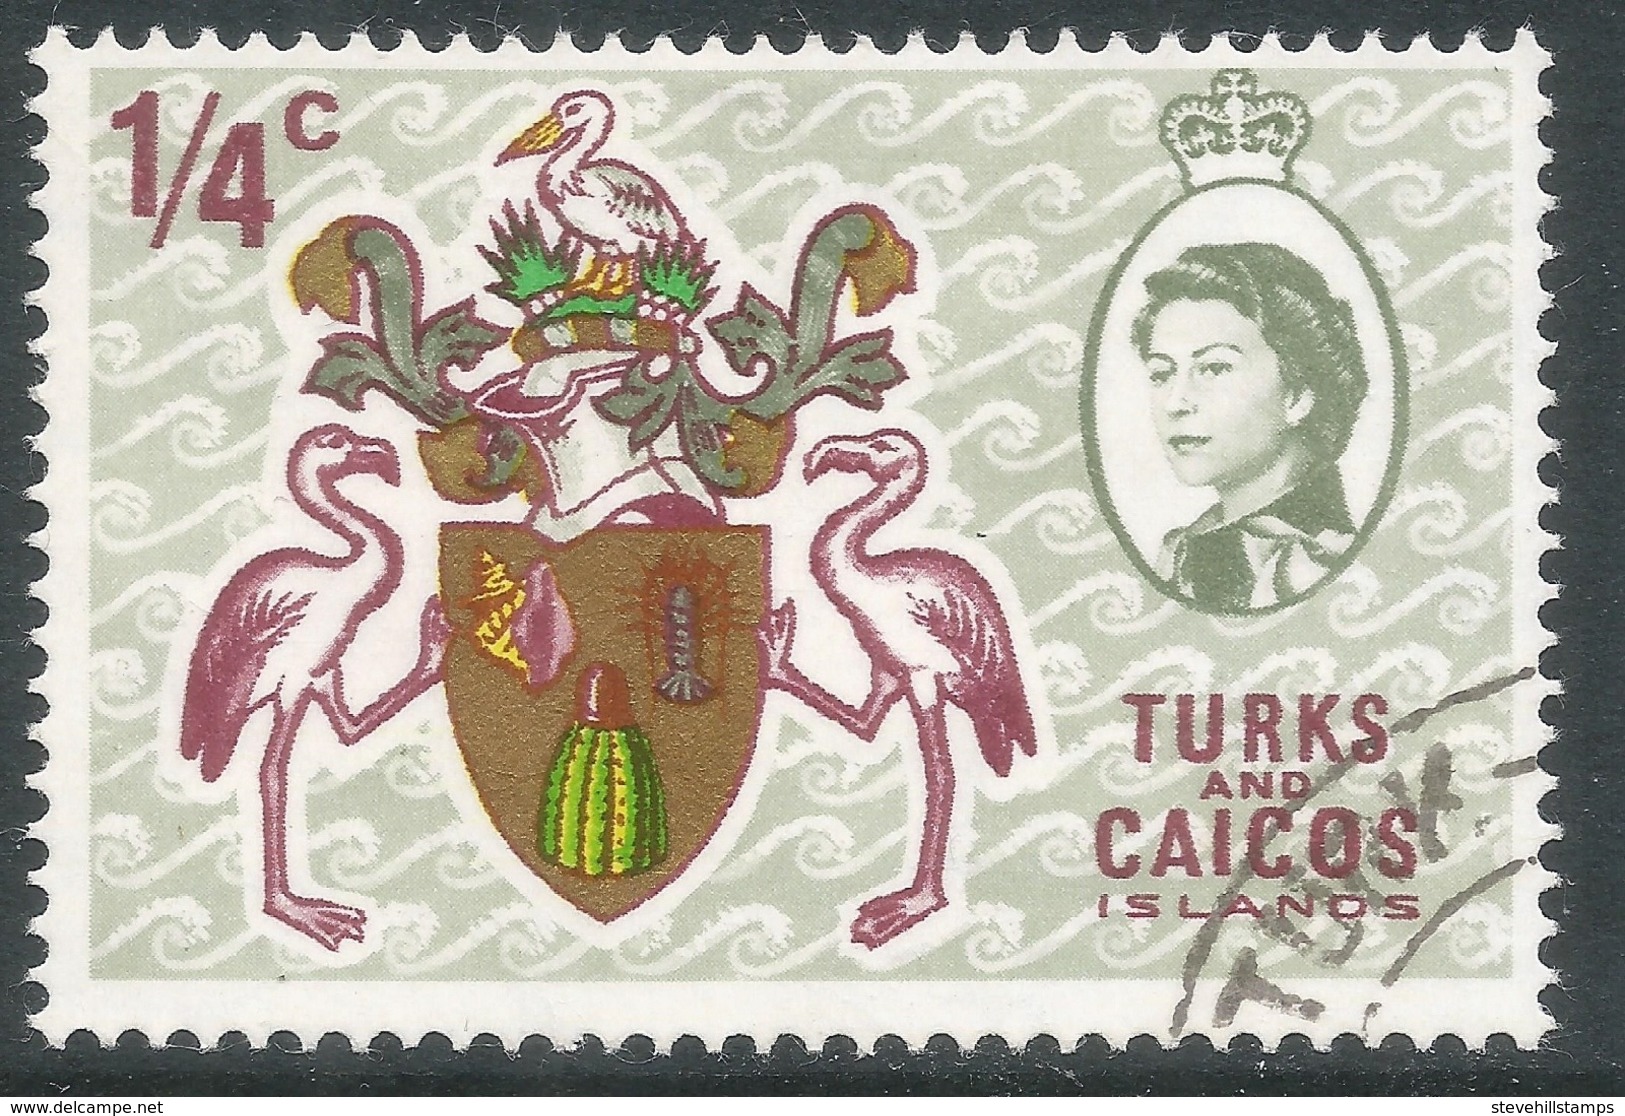 Turks & Caicos Islands. 1969-71 Decimal Currency. ¼c Used. SG 297 - Turks And Caicos